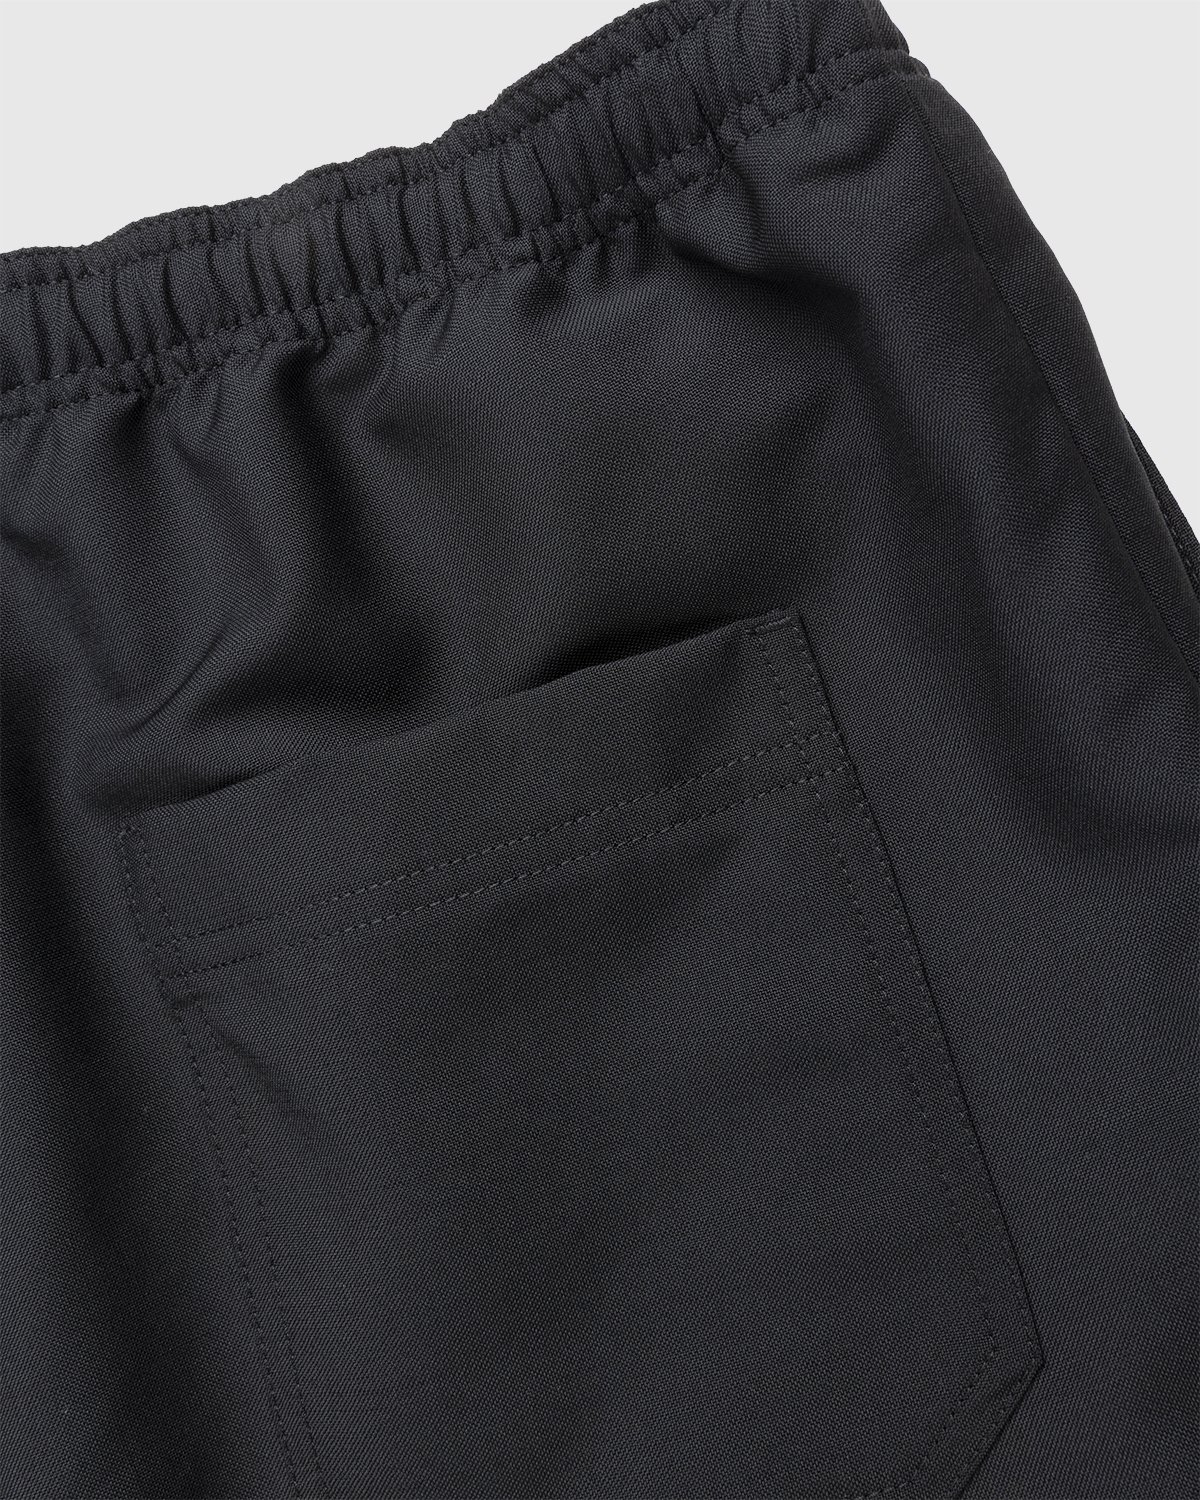 Acne Studios - Mohair Blend Drawstring Trousers Black - Clothing - Black - Image 3